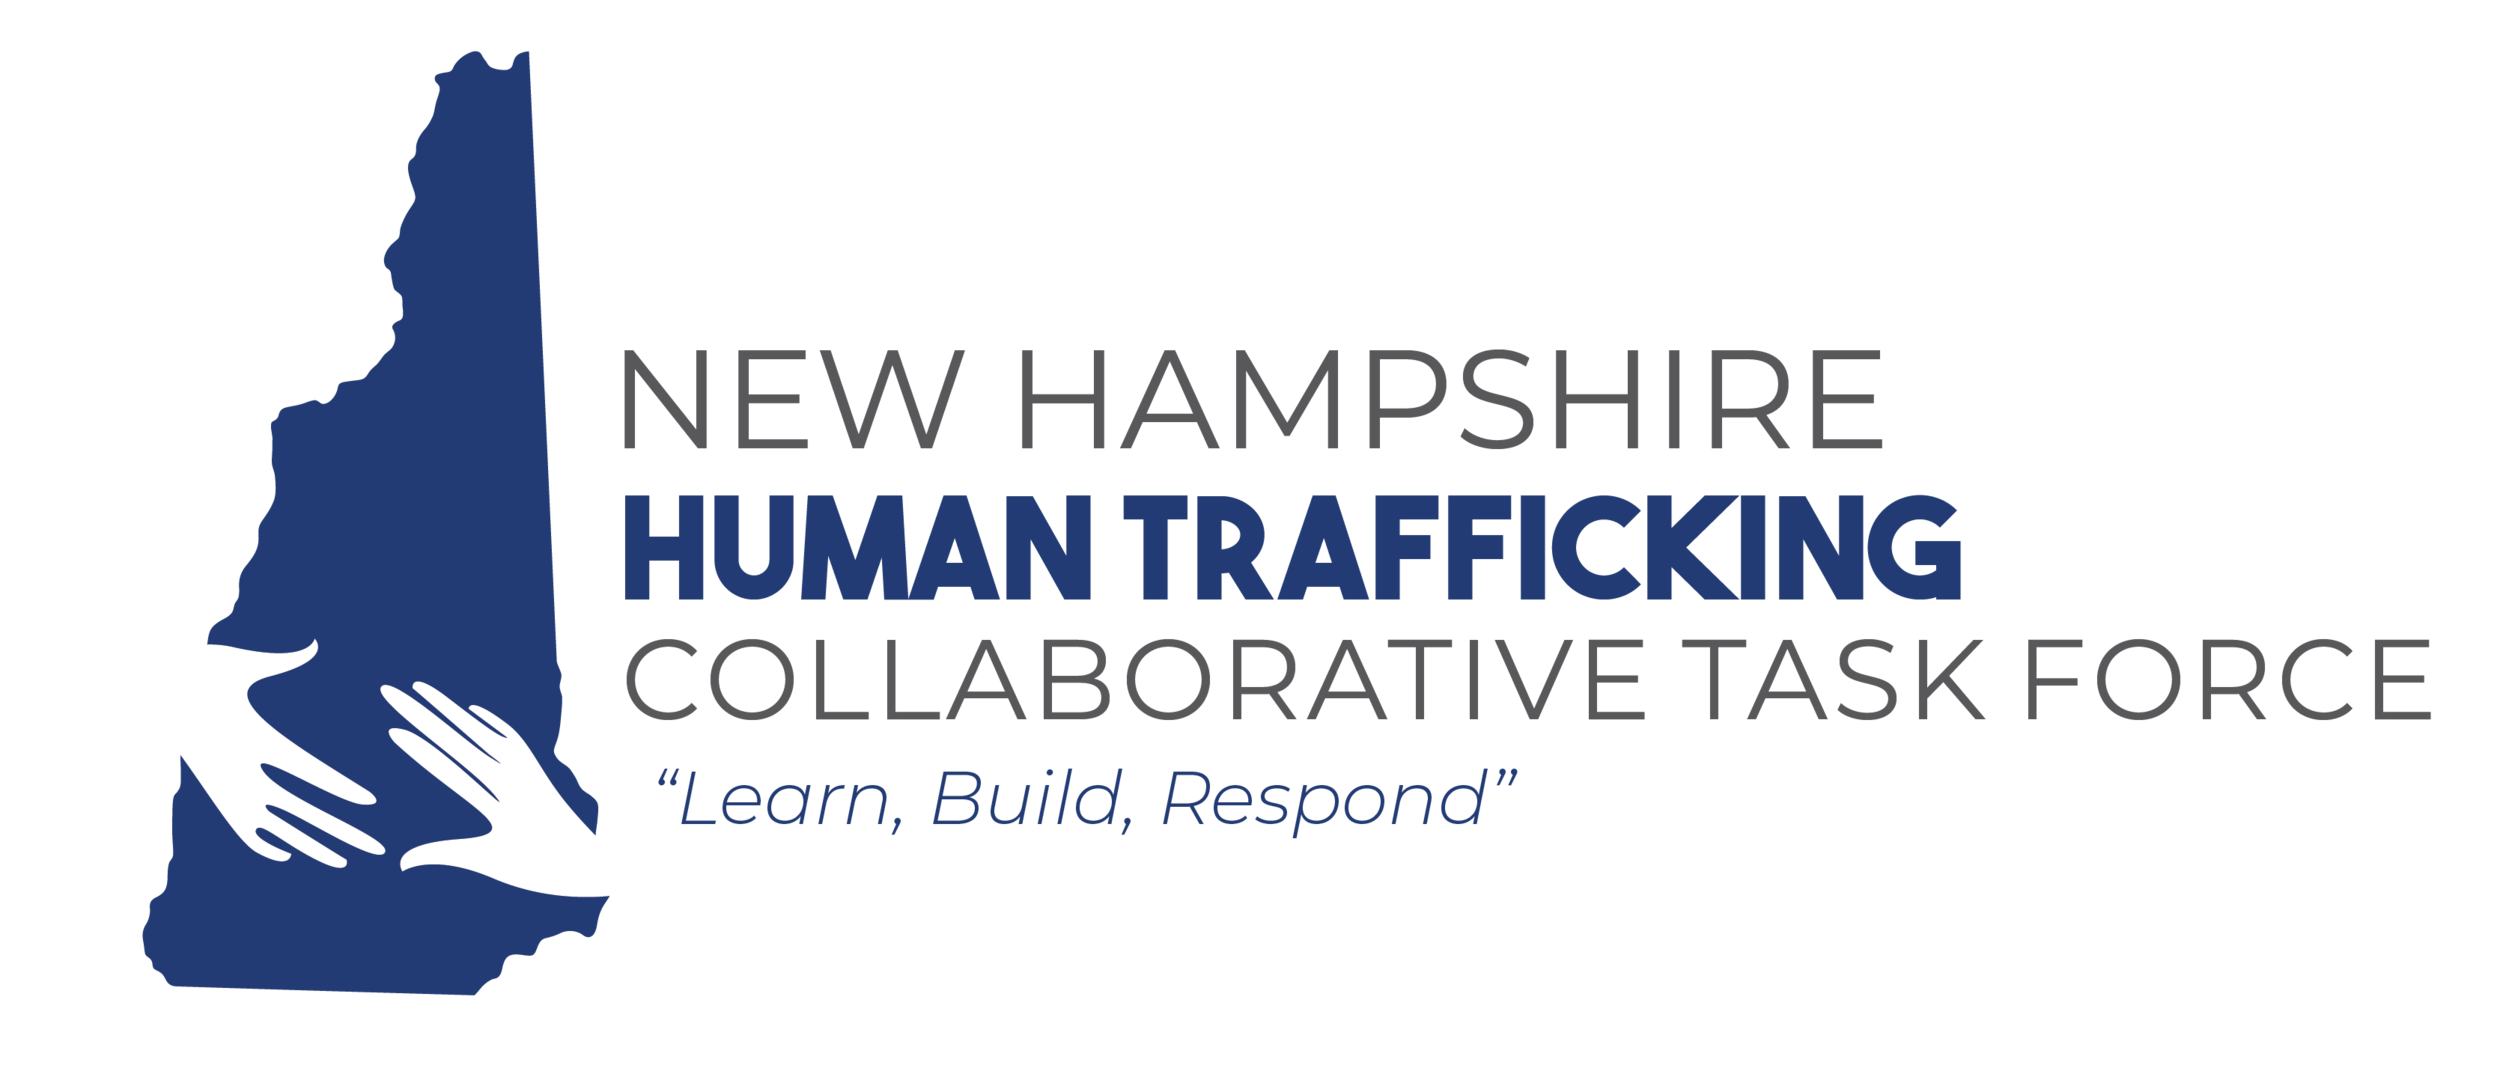 NH Human Trafficking Collaborative Task Force - Transparent-14.png